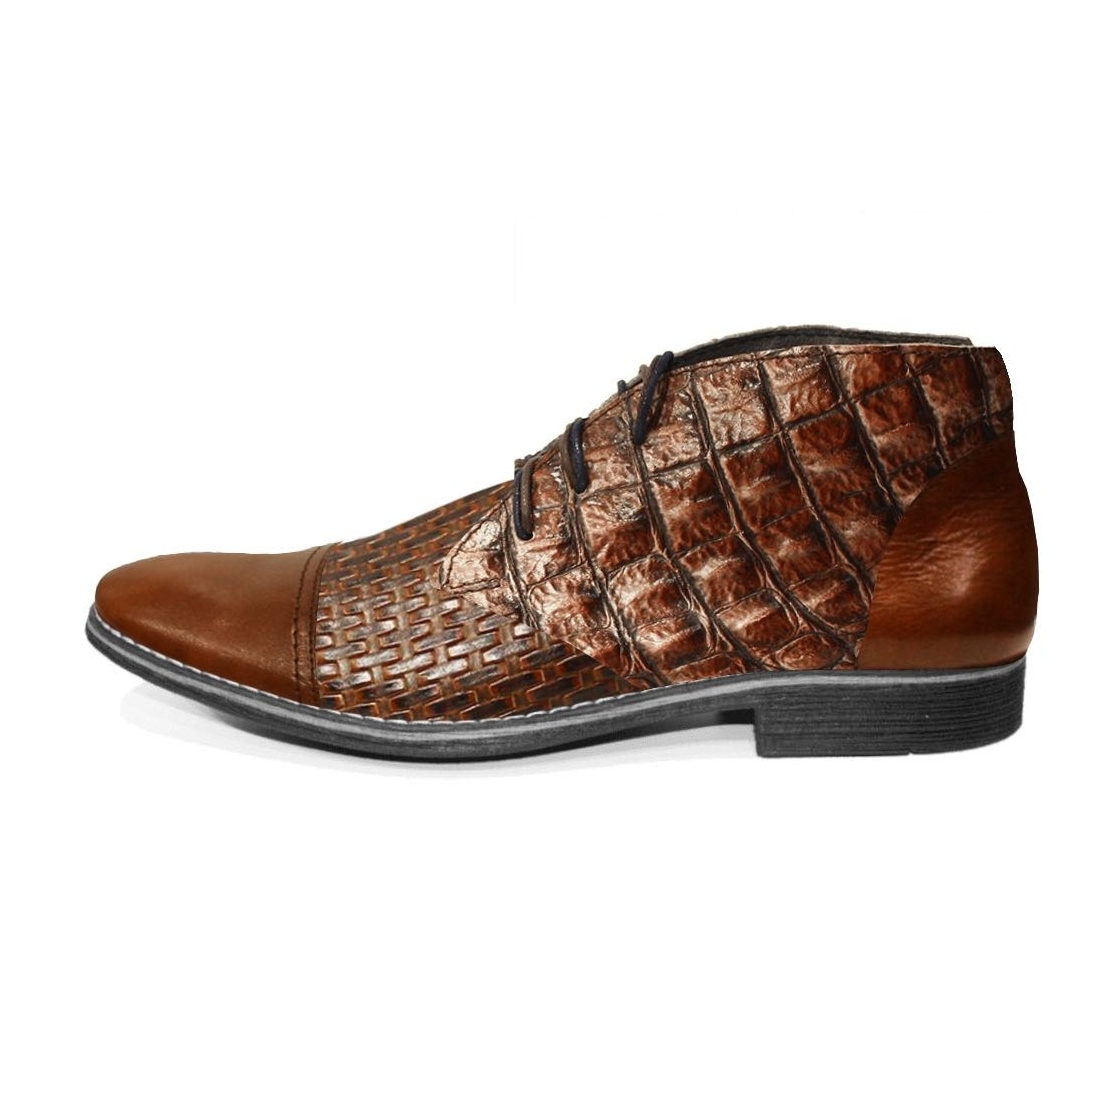 Modello Browerro -  Chukka Stiefel - Handmade Colorful Italian Leather Shoes